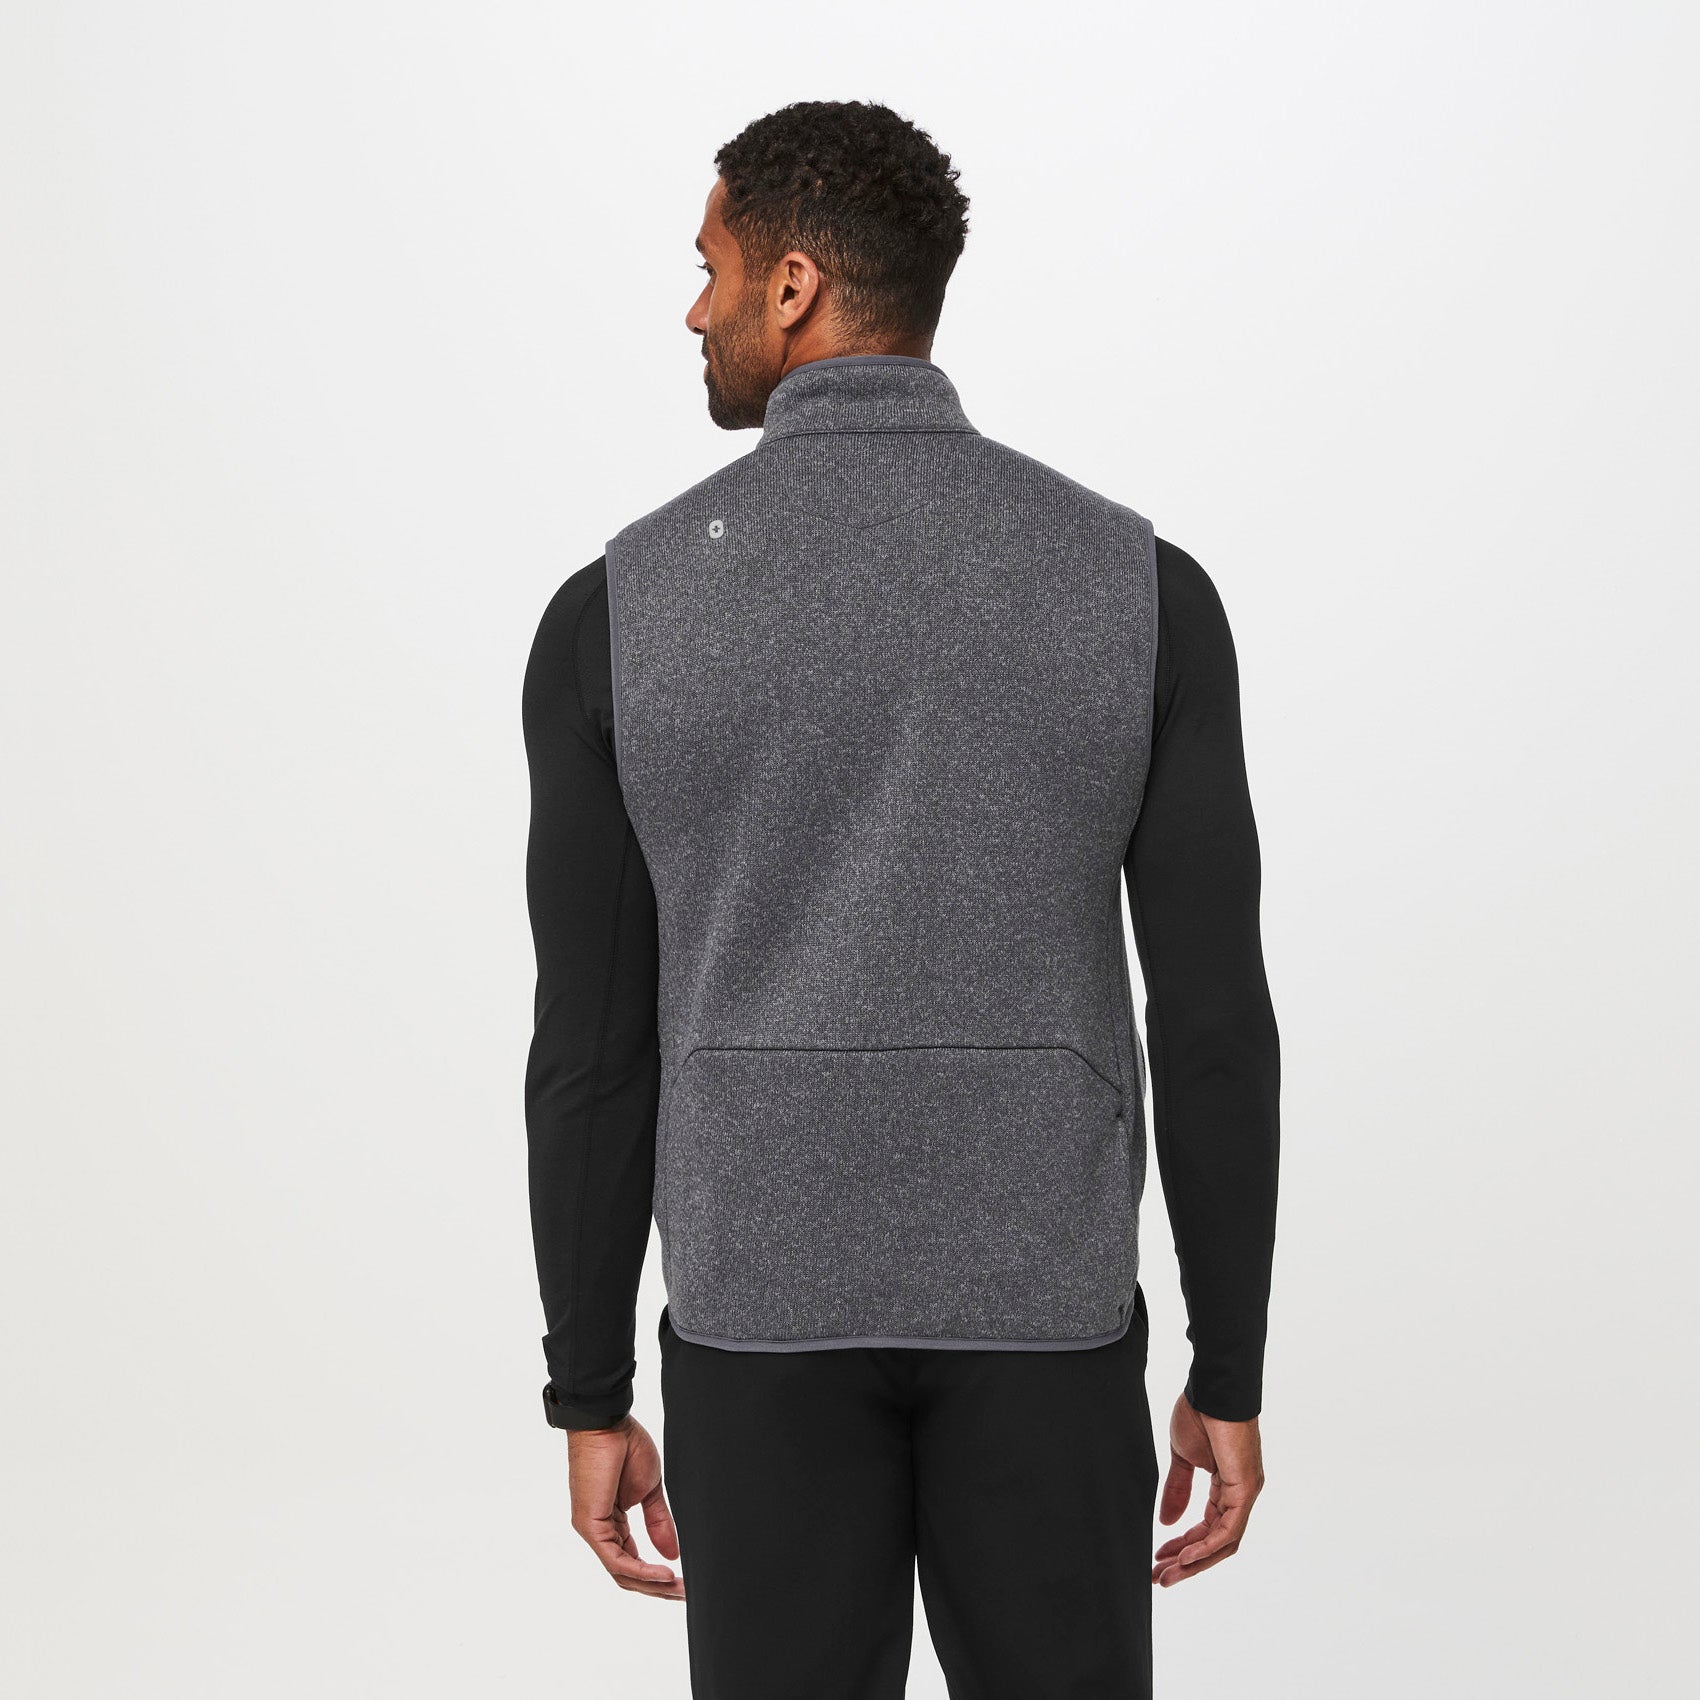 Mens Sweater Size M Columbia Black, Sueter para Hombre Size M Columbia negro